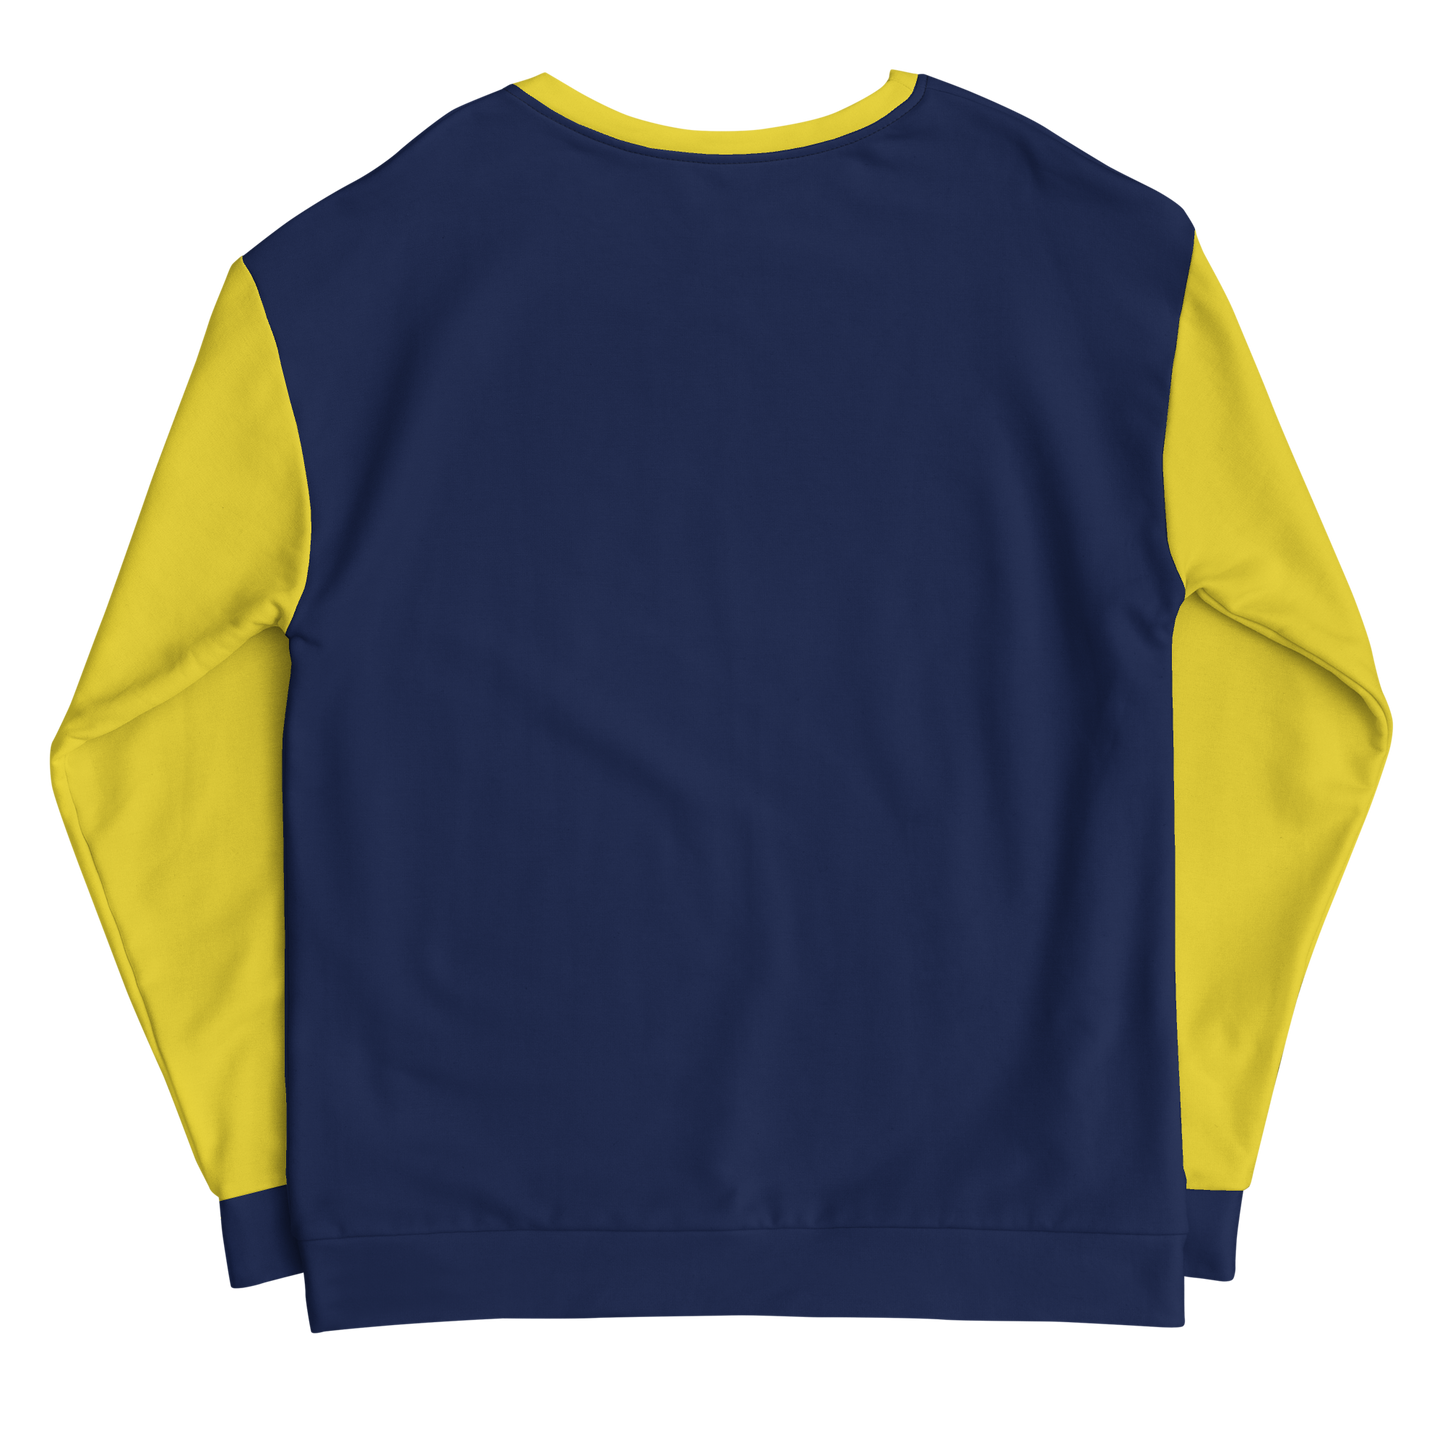 Yellowjackets W Varsity Logo Unisex Crew Neck Sweatshirt